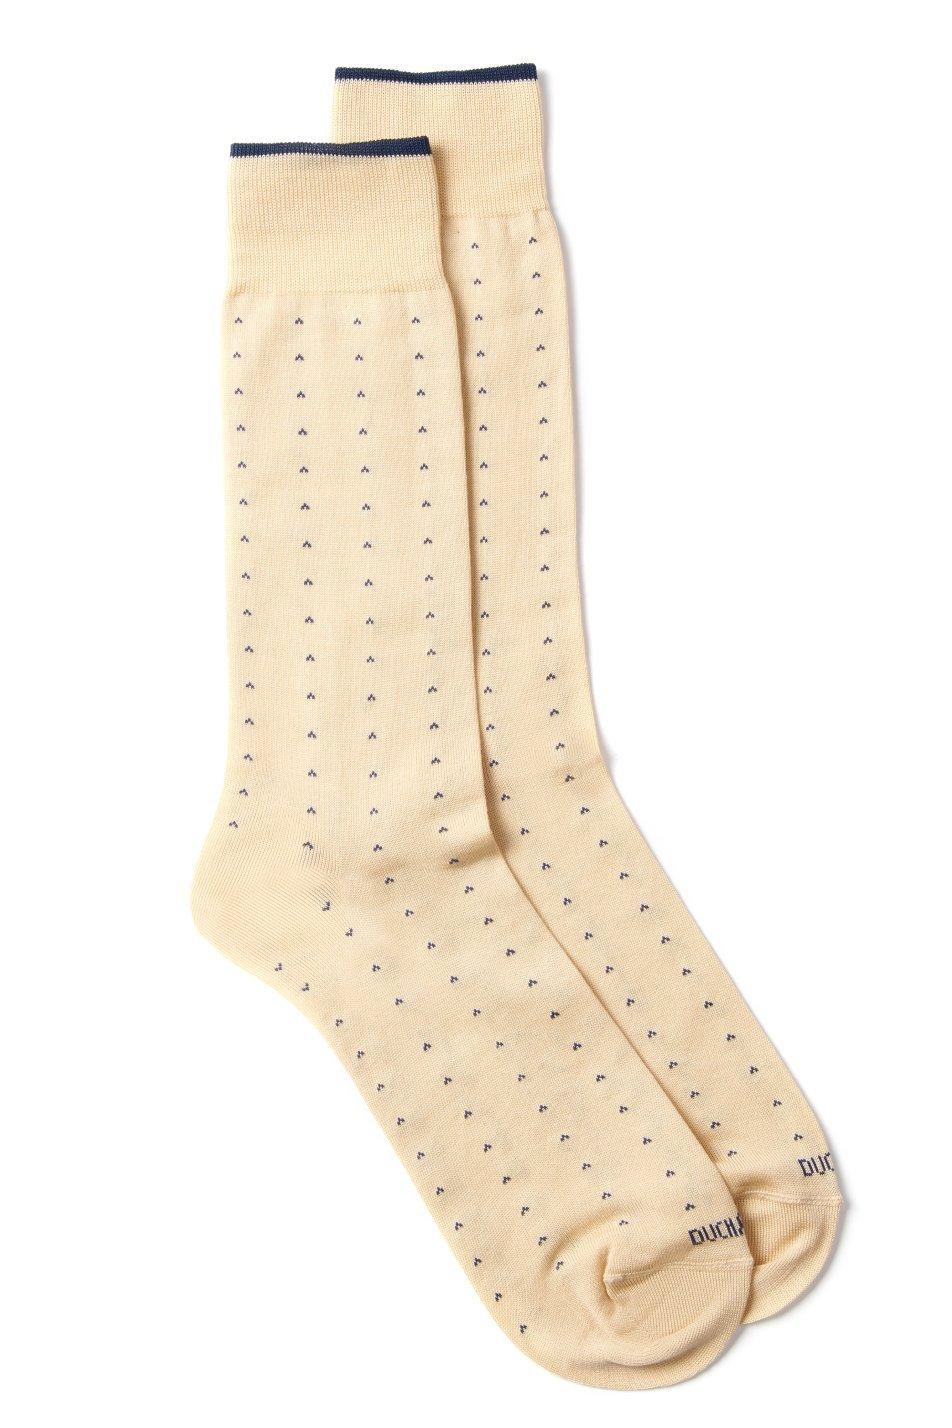 Носок в горошек Duchamp, бежевый janis mink marcel duchamp